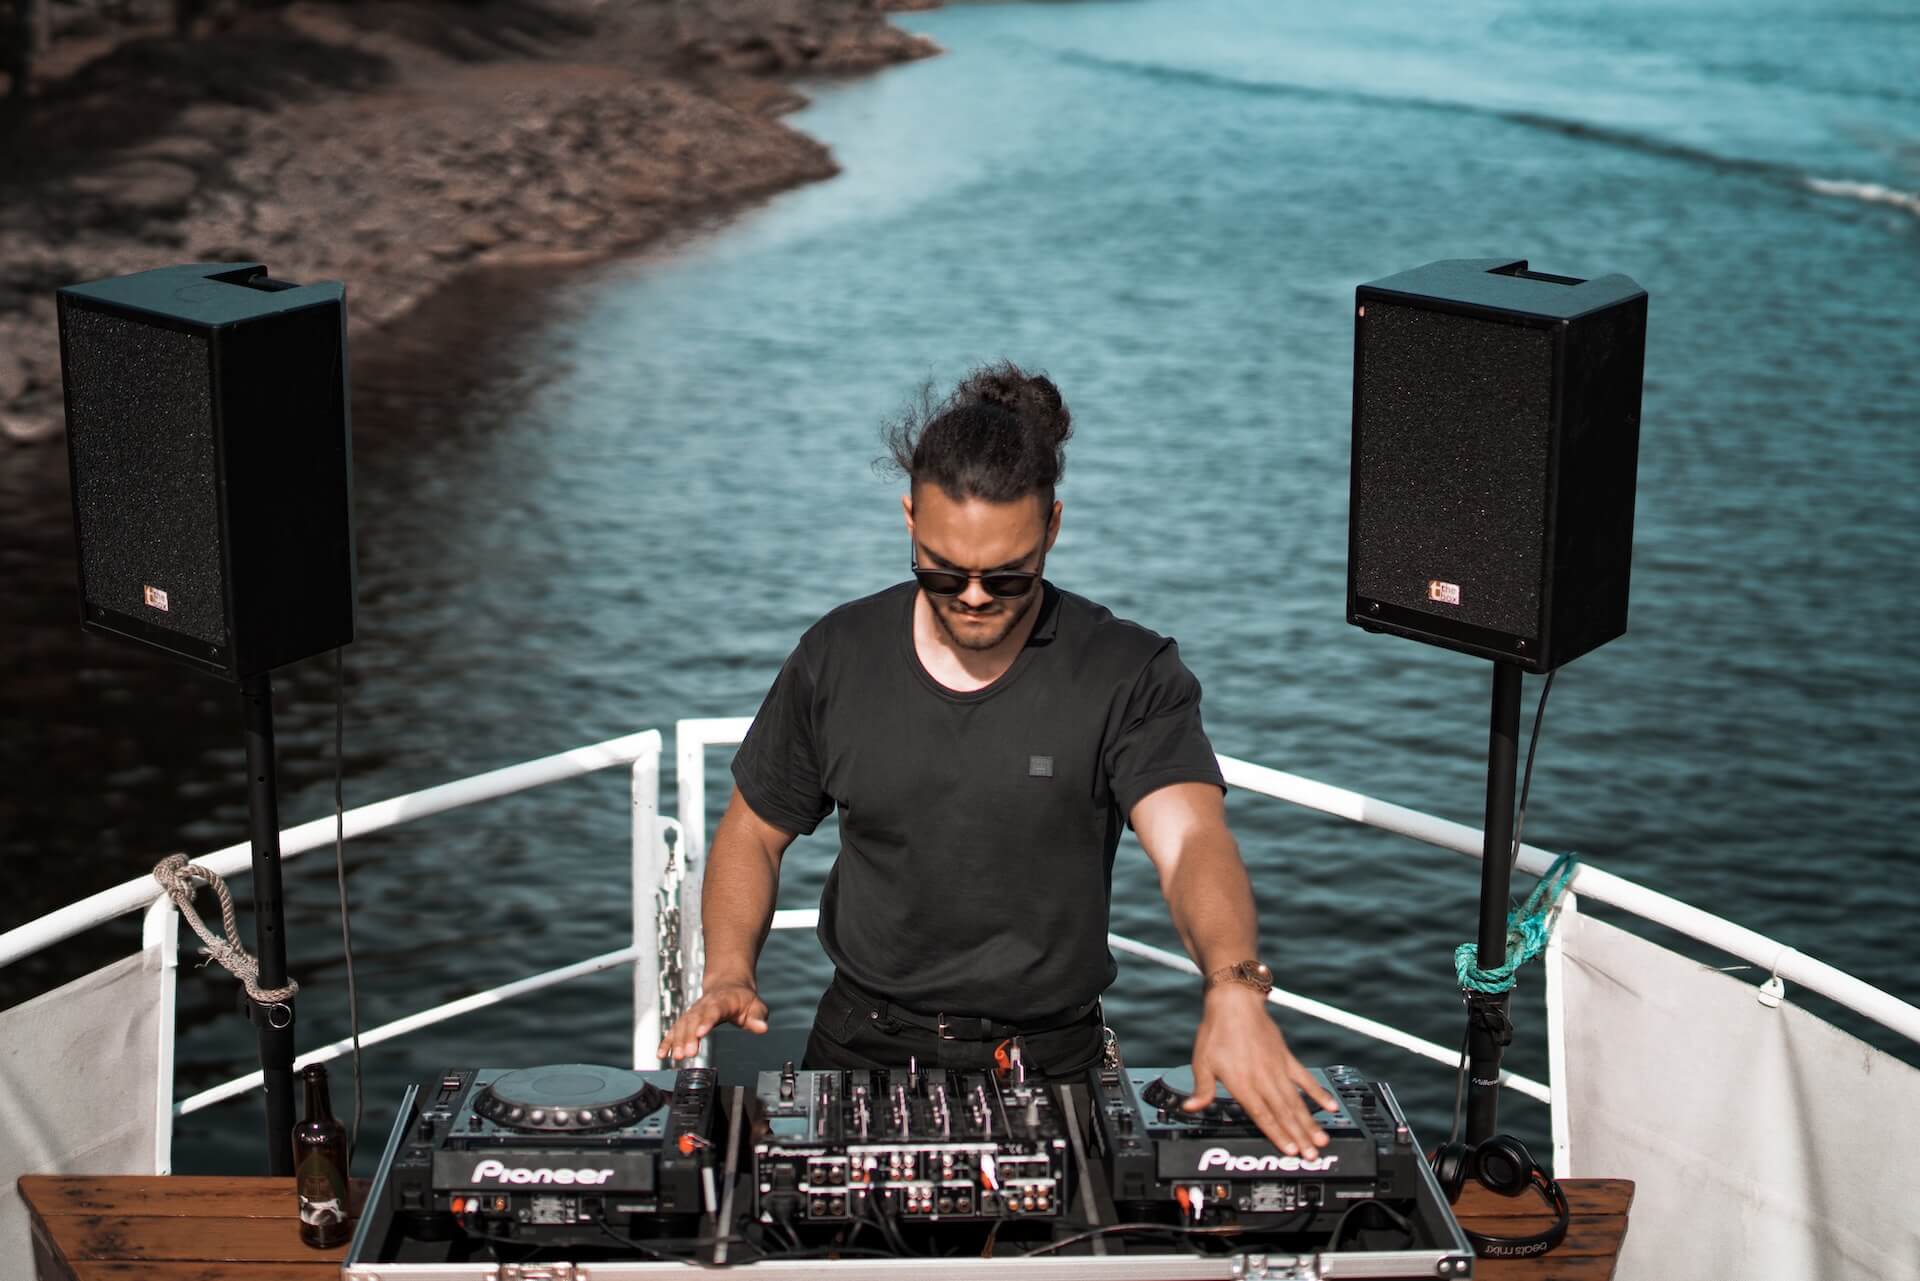 DJ on a boat